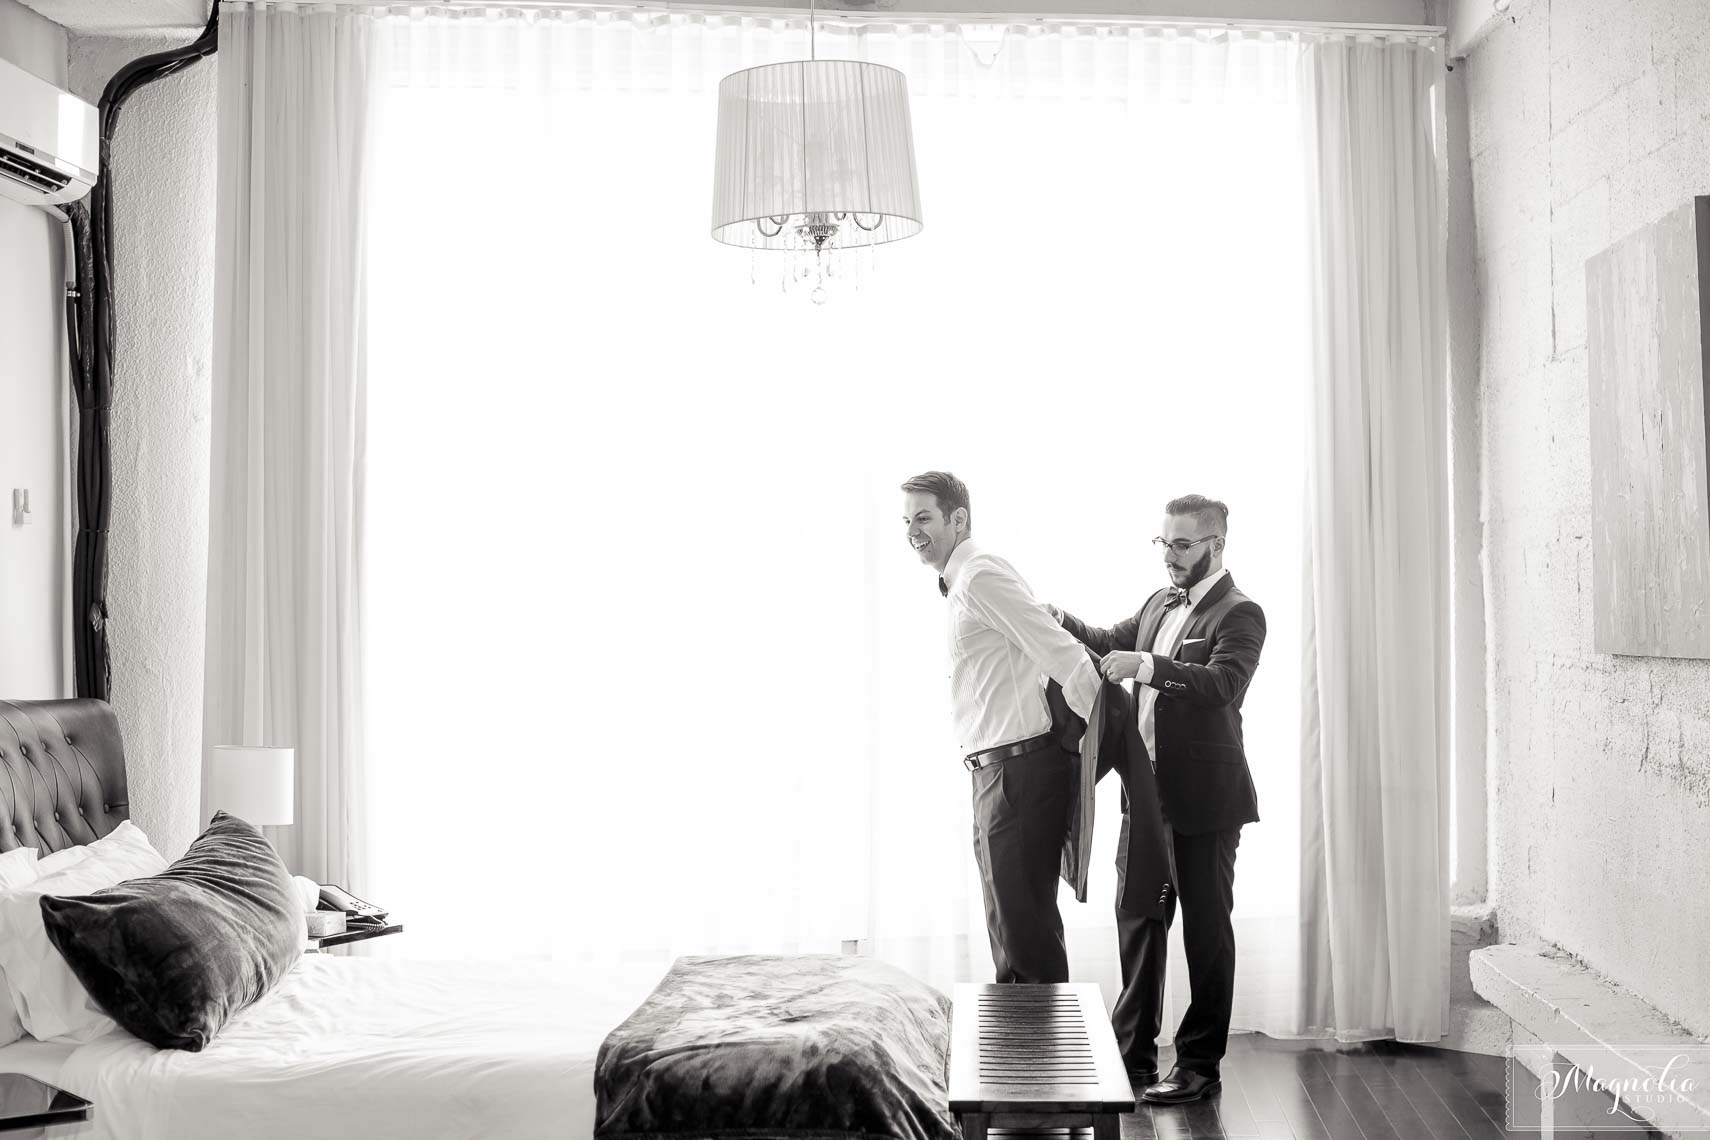 Best Wedding photographer in Montreal Quebec | Magnolia Studio Photography